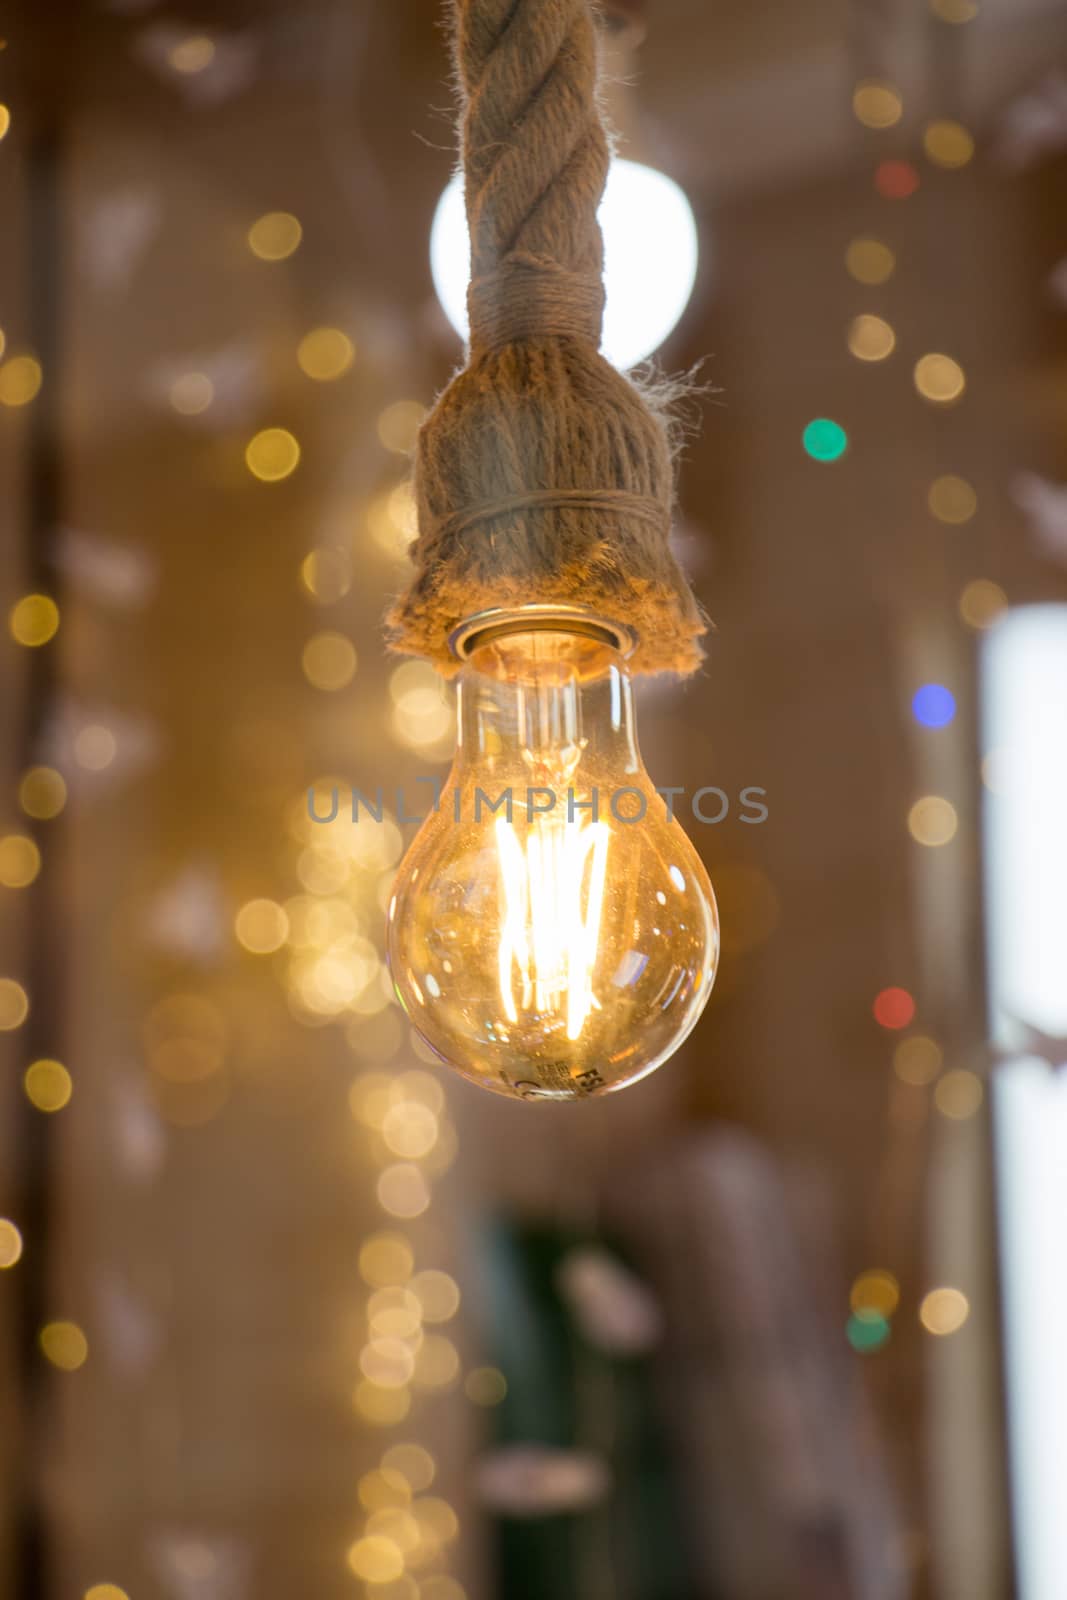 Decorative antique edison style light bulbs by berkay